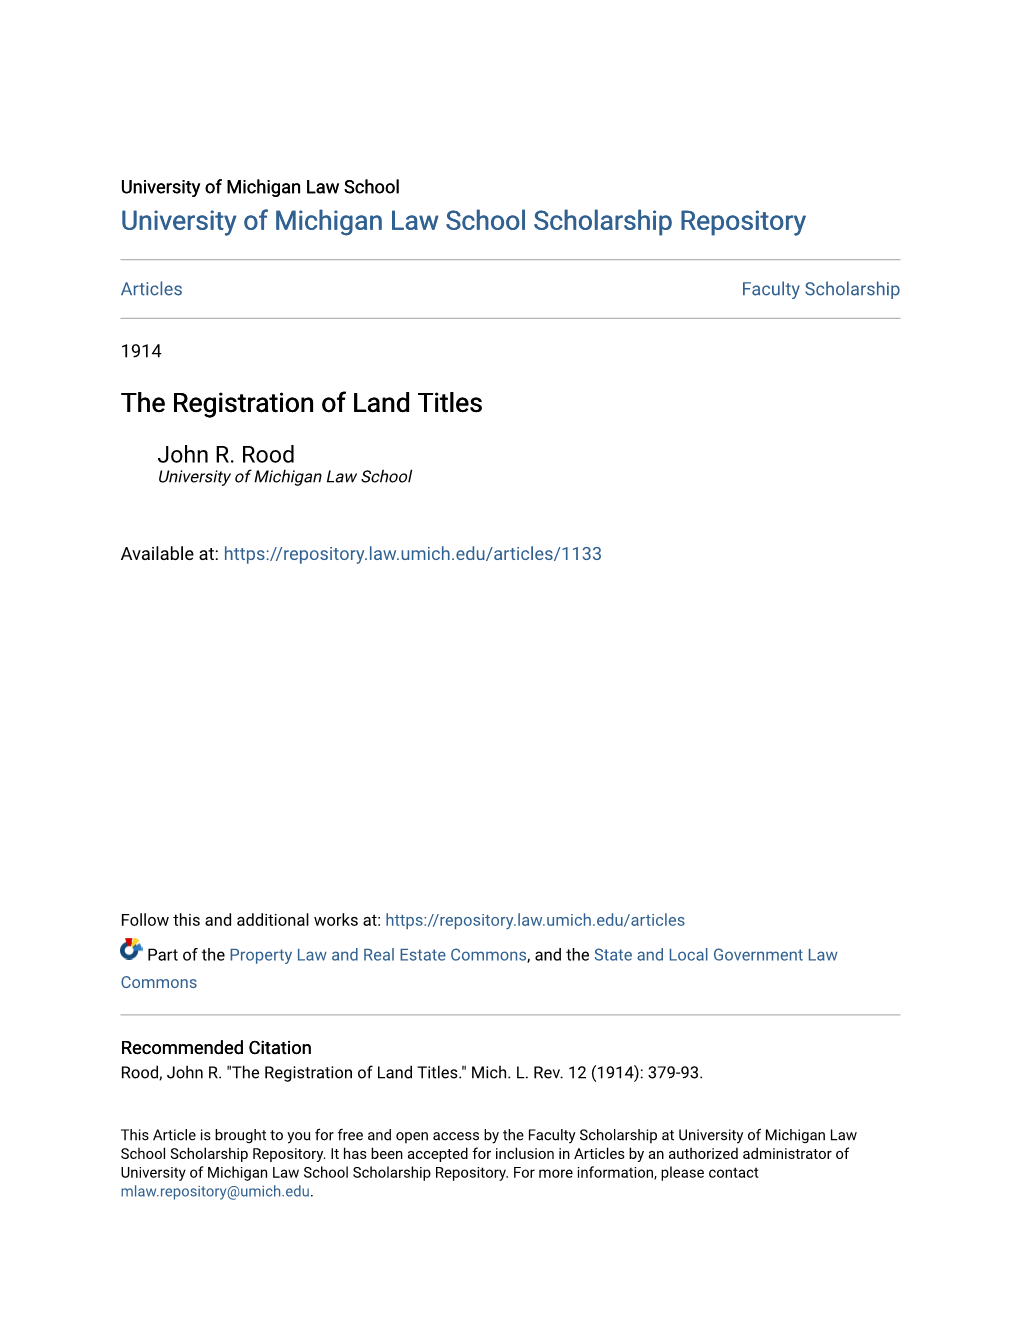 The Registration of Land Titles